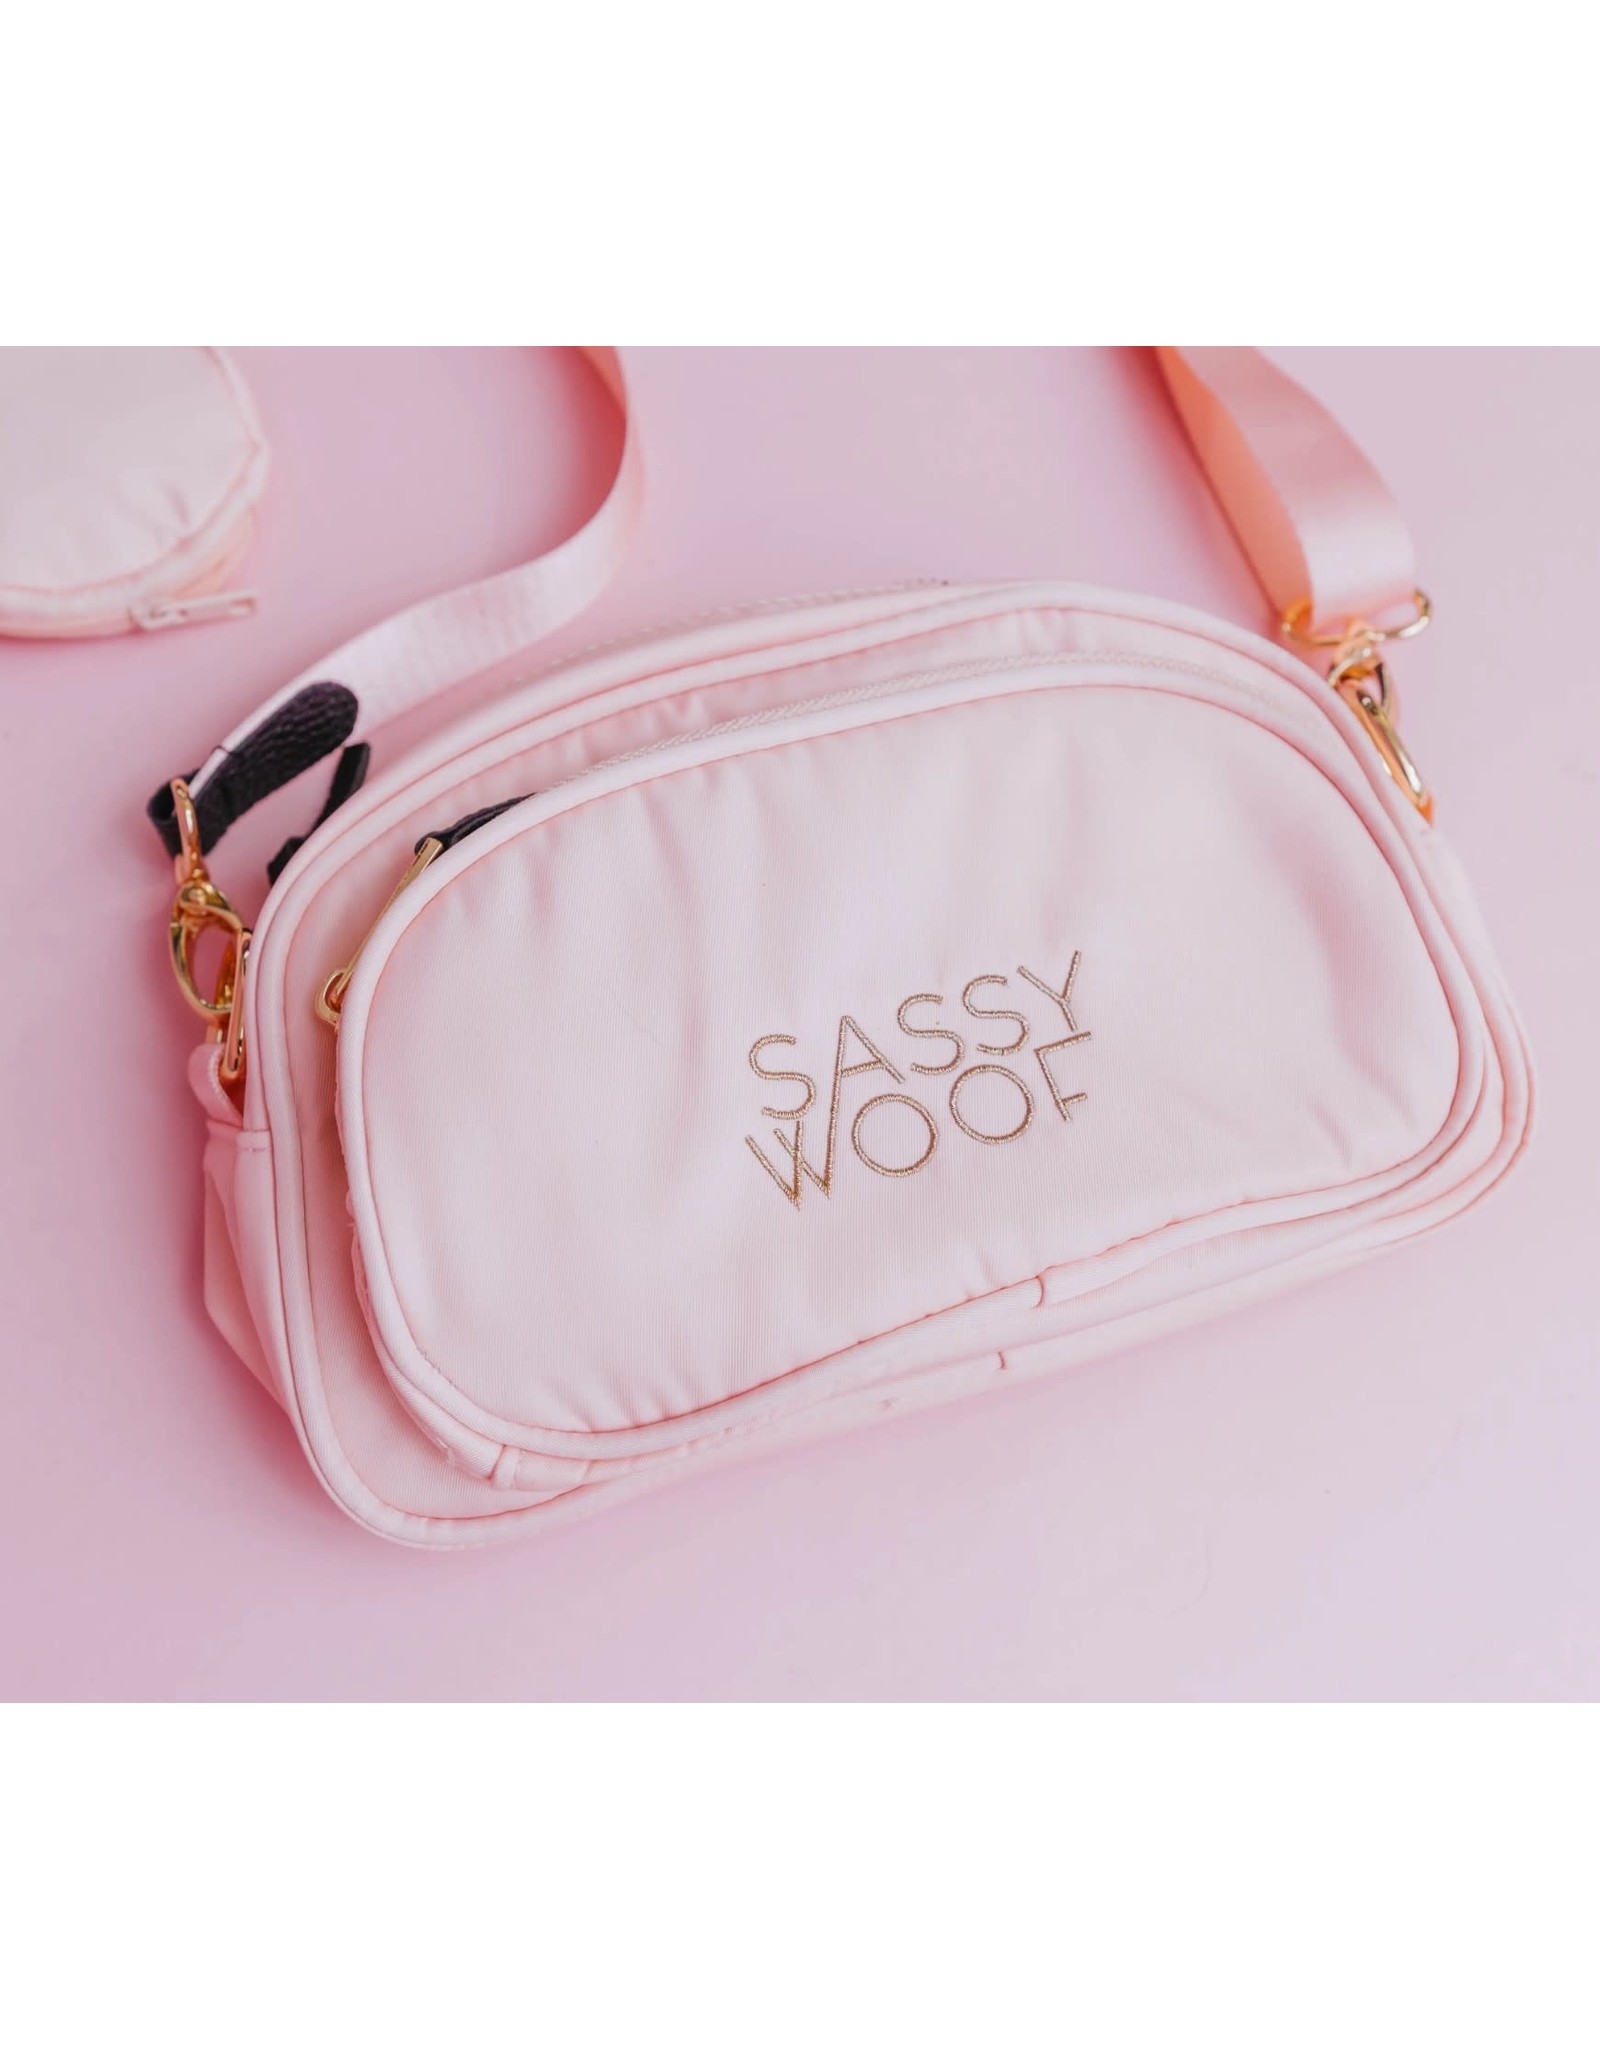 Sassy Woof Walk & Woof Crossbody Bags